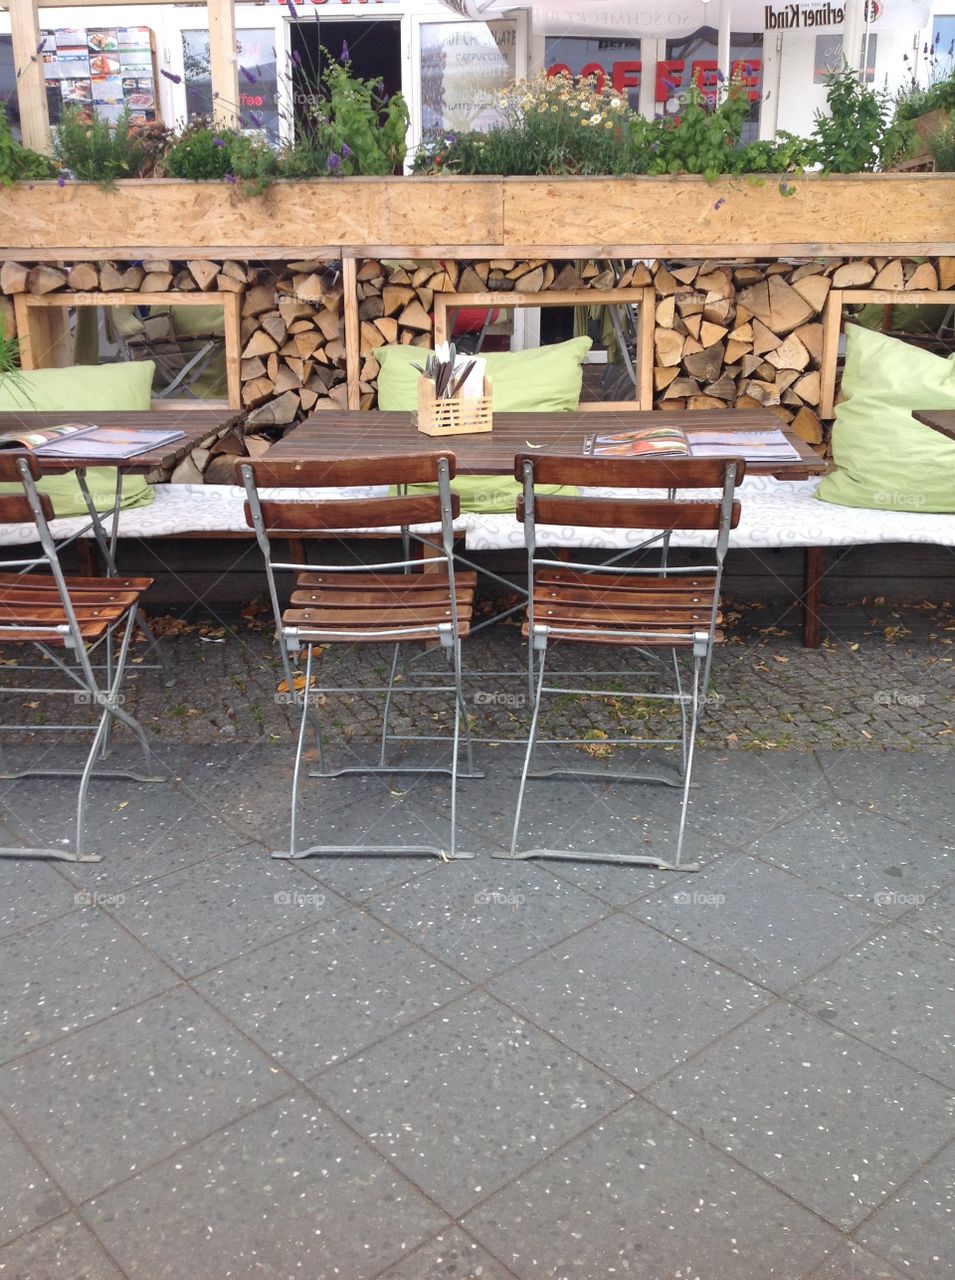 Berlin sidewalk cafe. Berlin sidewalk cafe in the summer.
Germany environmentally-friendly restaurant